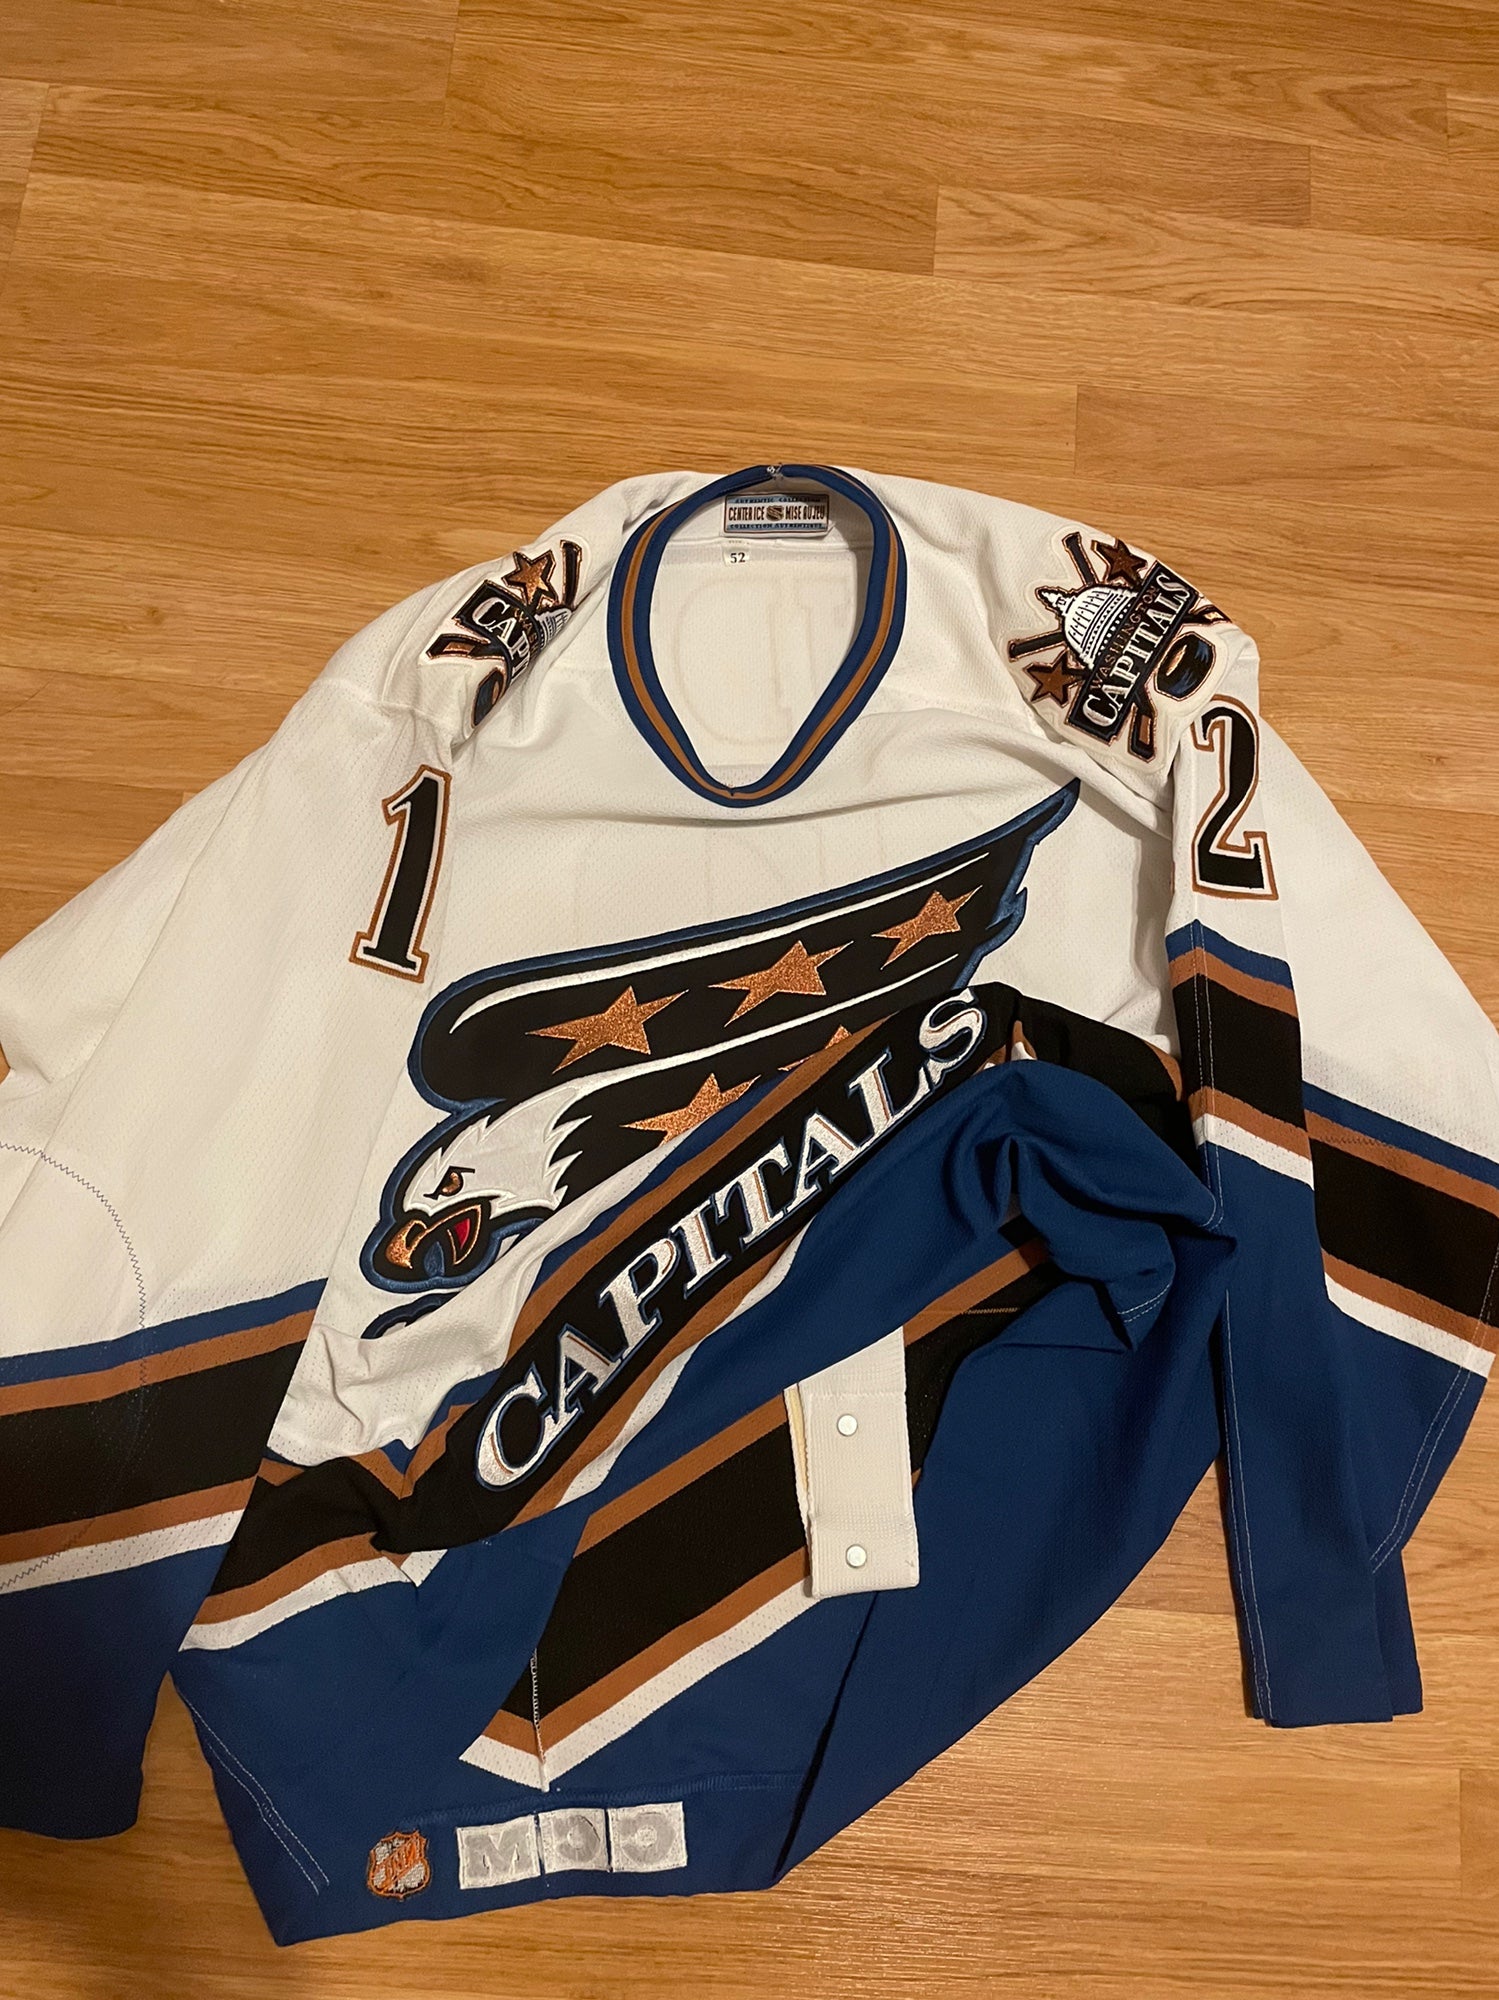 Alexander Ovechkin Jersey - Washington Capitals 1990 Home NHL Throwback  Jersey